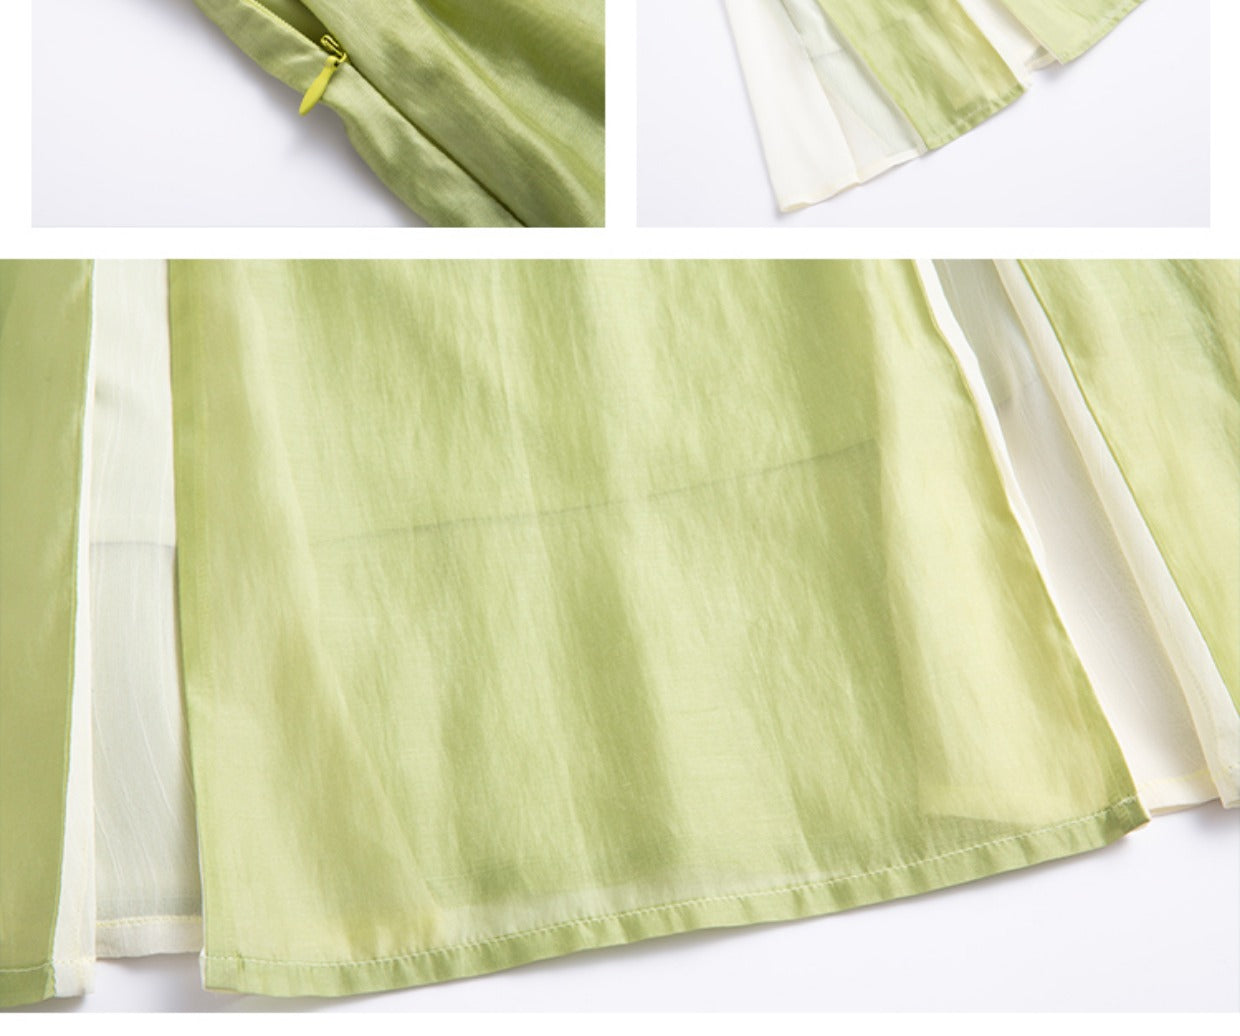 Chixia~Green Plum~Han Lolita Green-White Side Split Skirt Set   